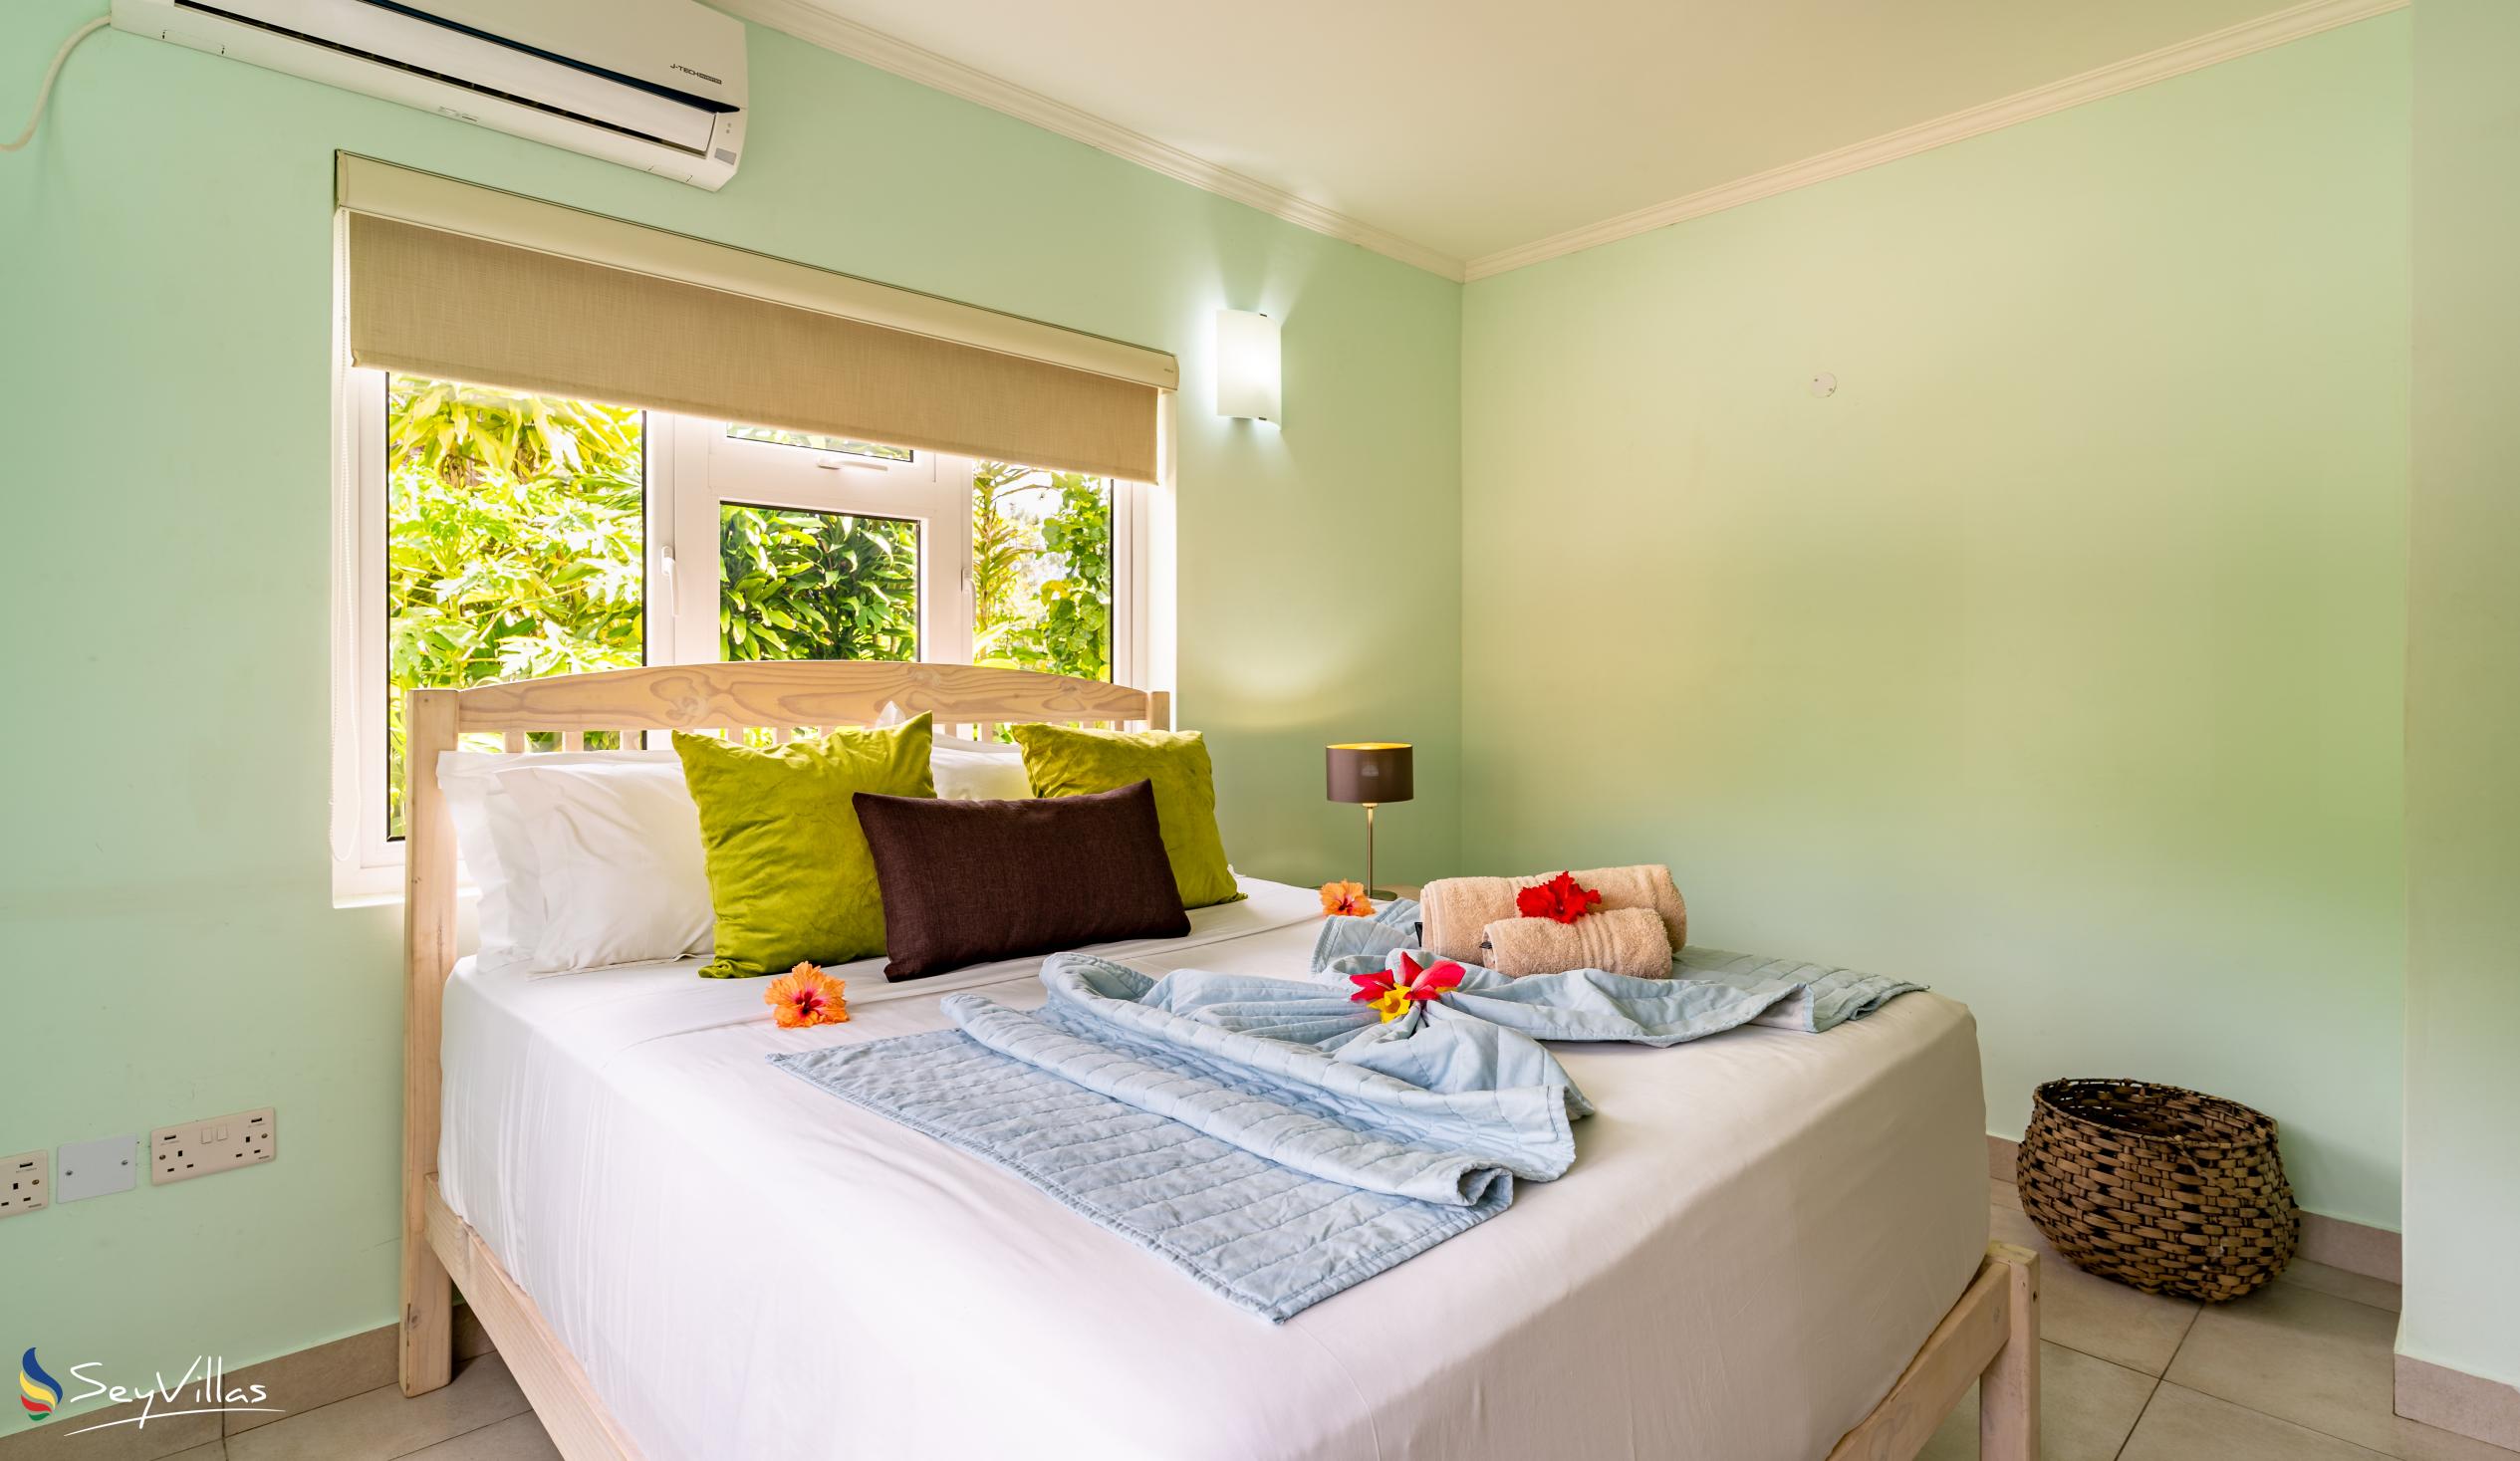 Photo 76: Mae Waterfront Apartments - 2-Bedroom Apartment - Mahé (Seychelles)